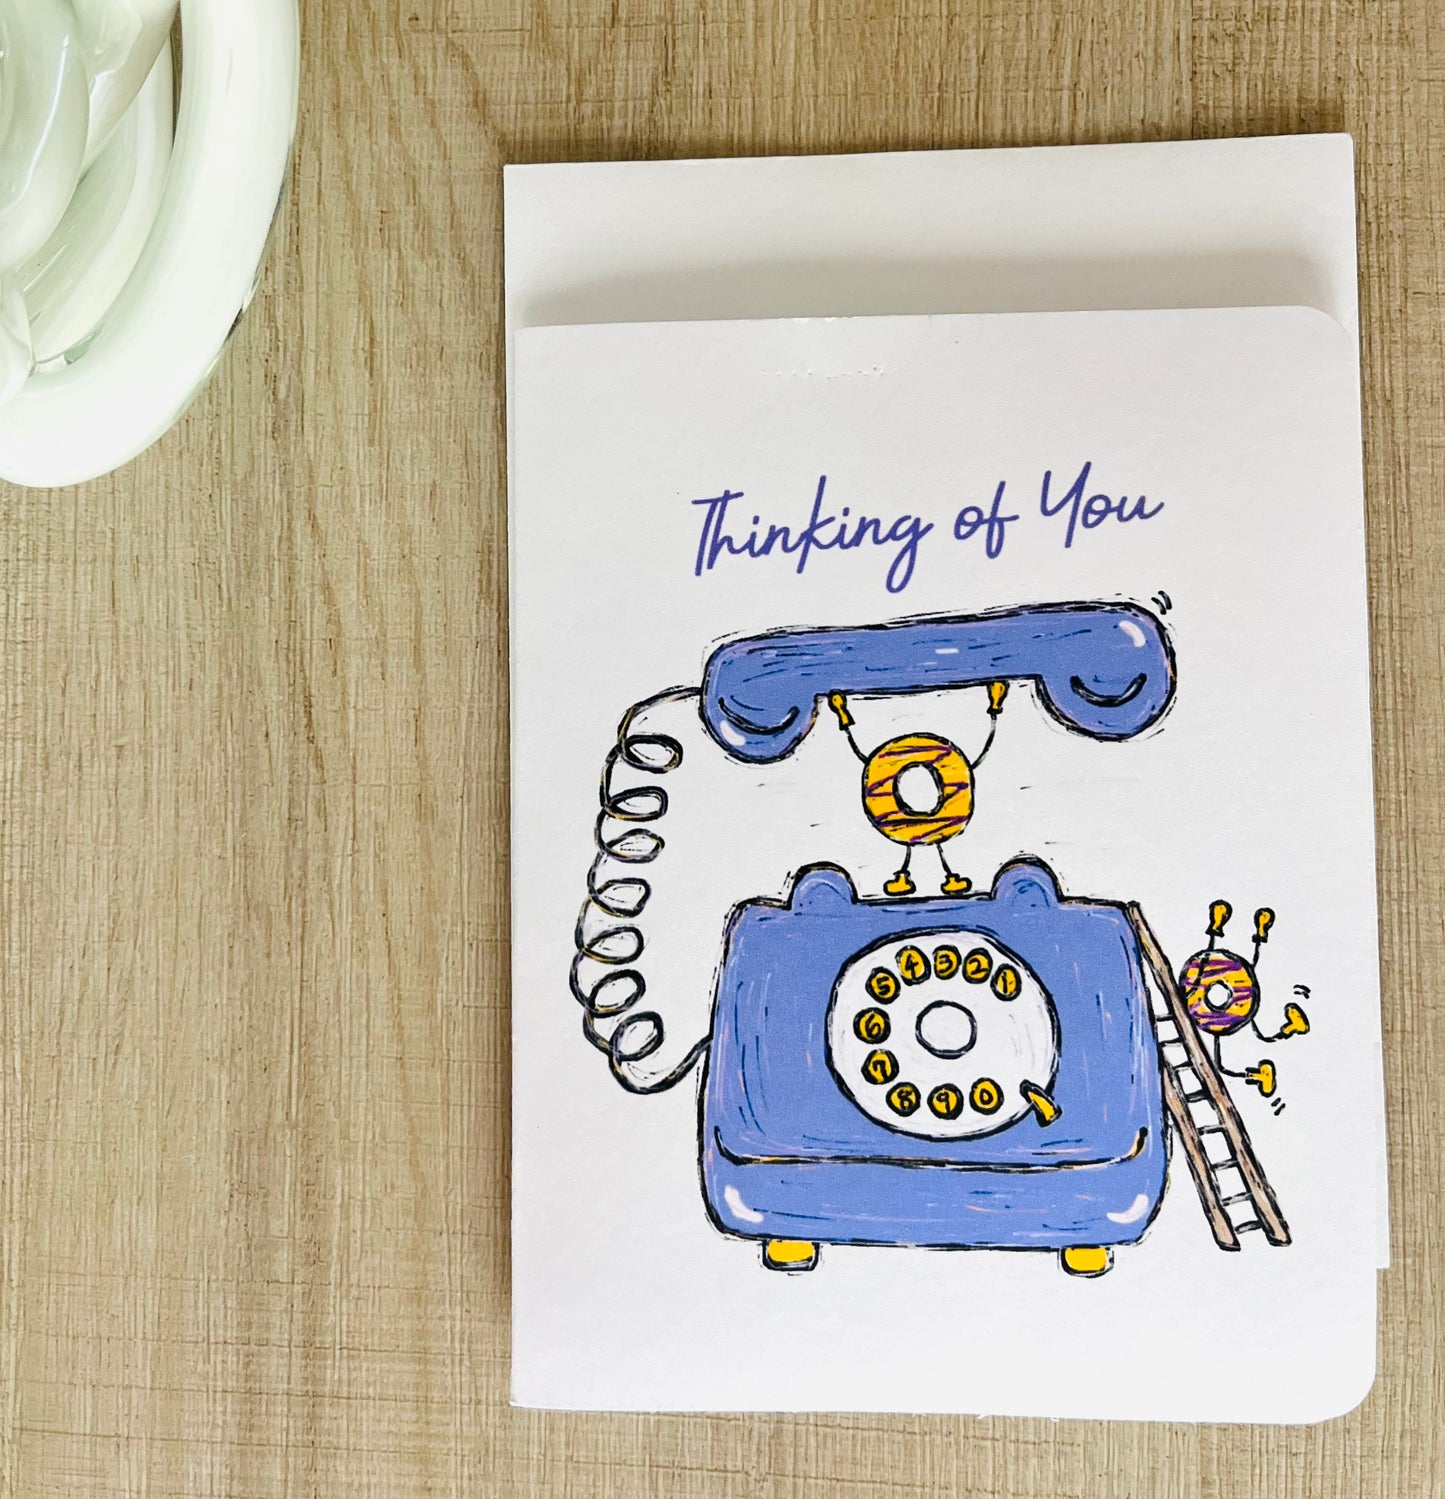 Classic Telephone Thinking of You Handmade Greeting Card